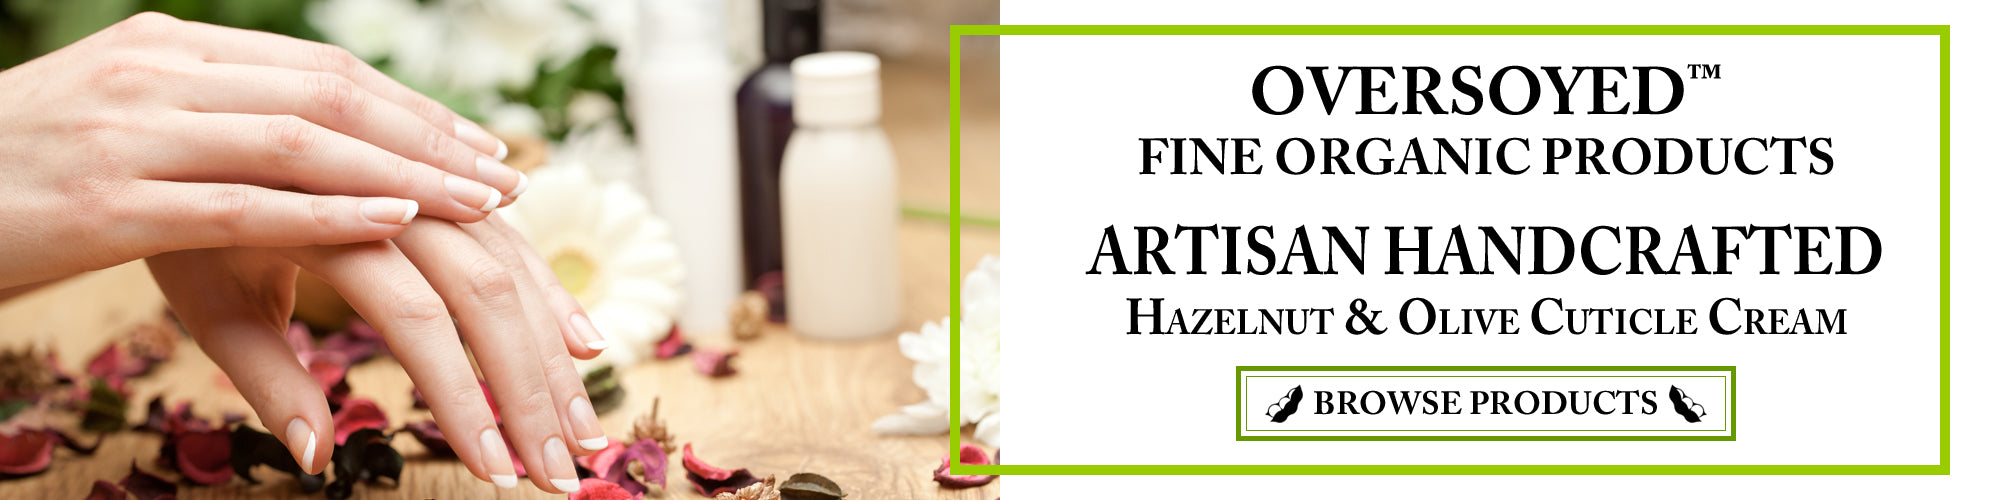 OverSoyed Fine Organic Products - Artisan Handcrafted Hazelnut & Olive Cuticle Cream